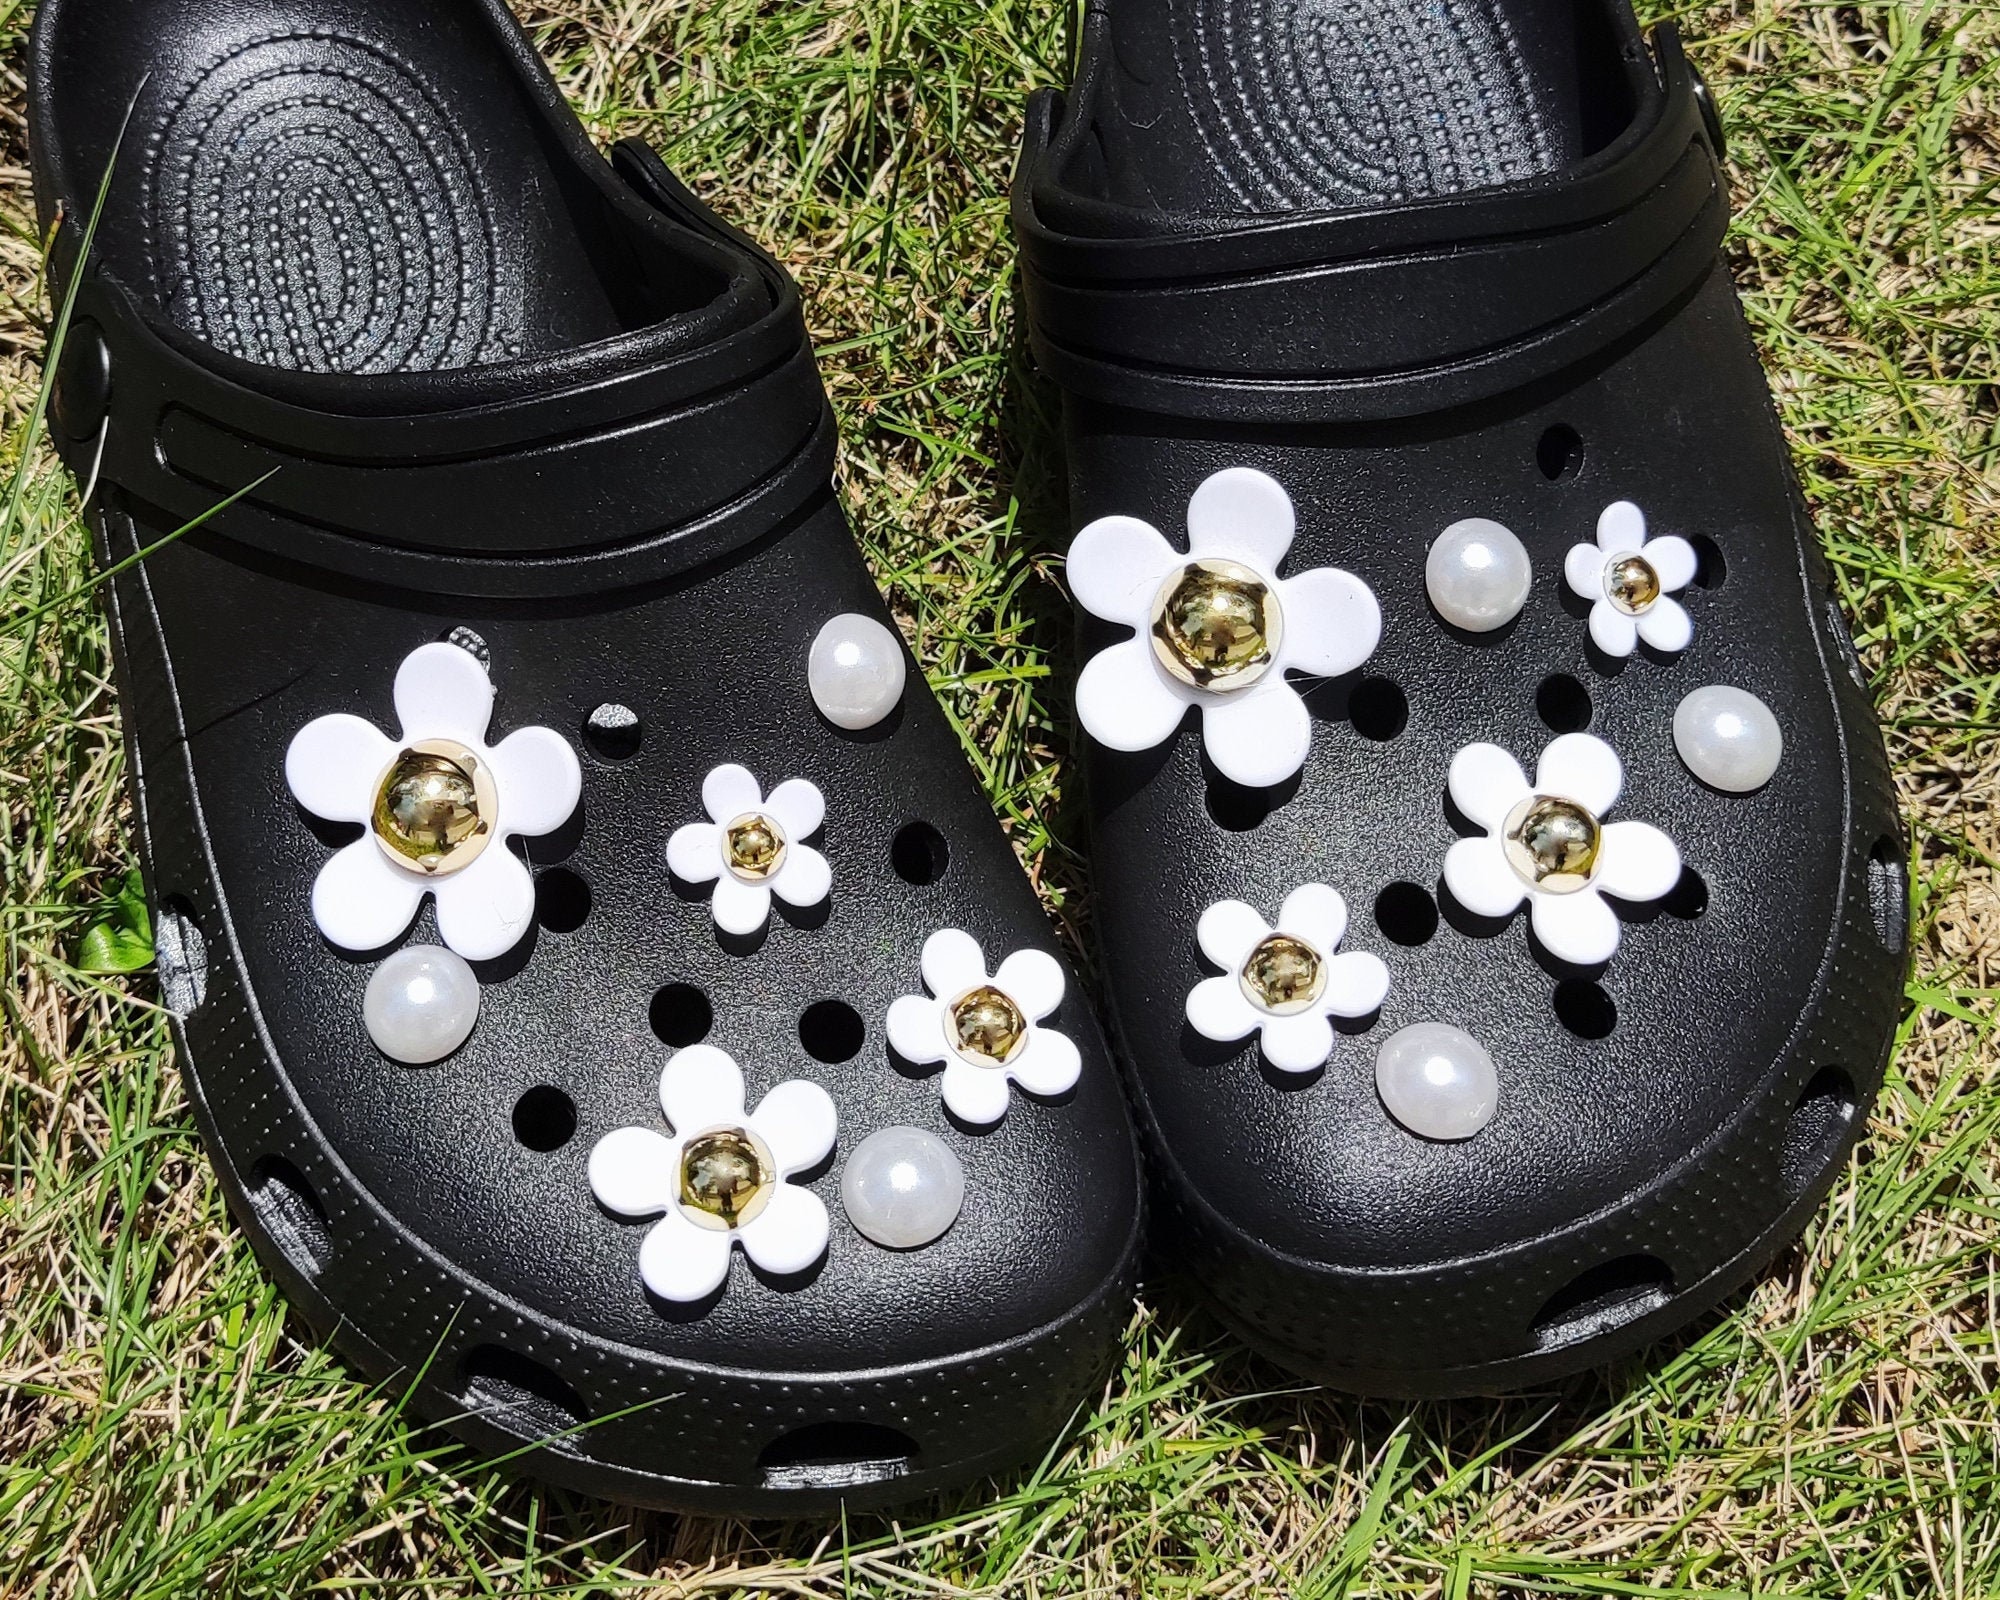 Luxury Rhinestone Jewelry Shoe Charms For Women Garden Shoes